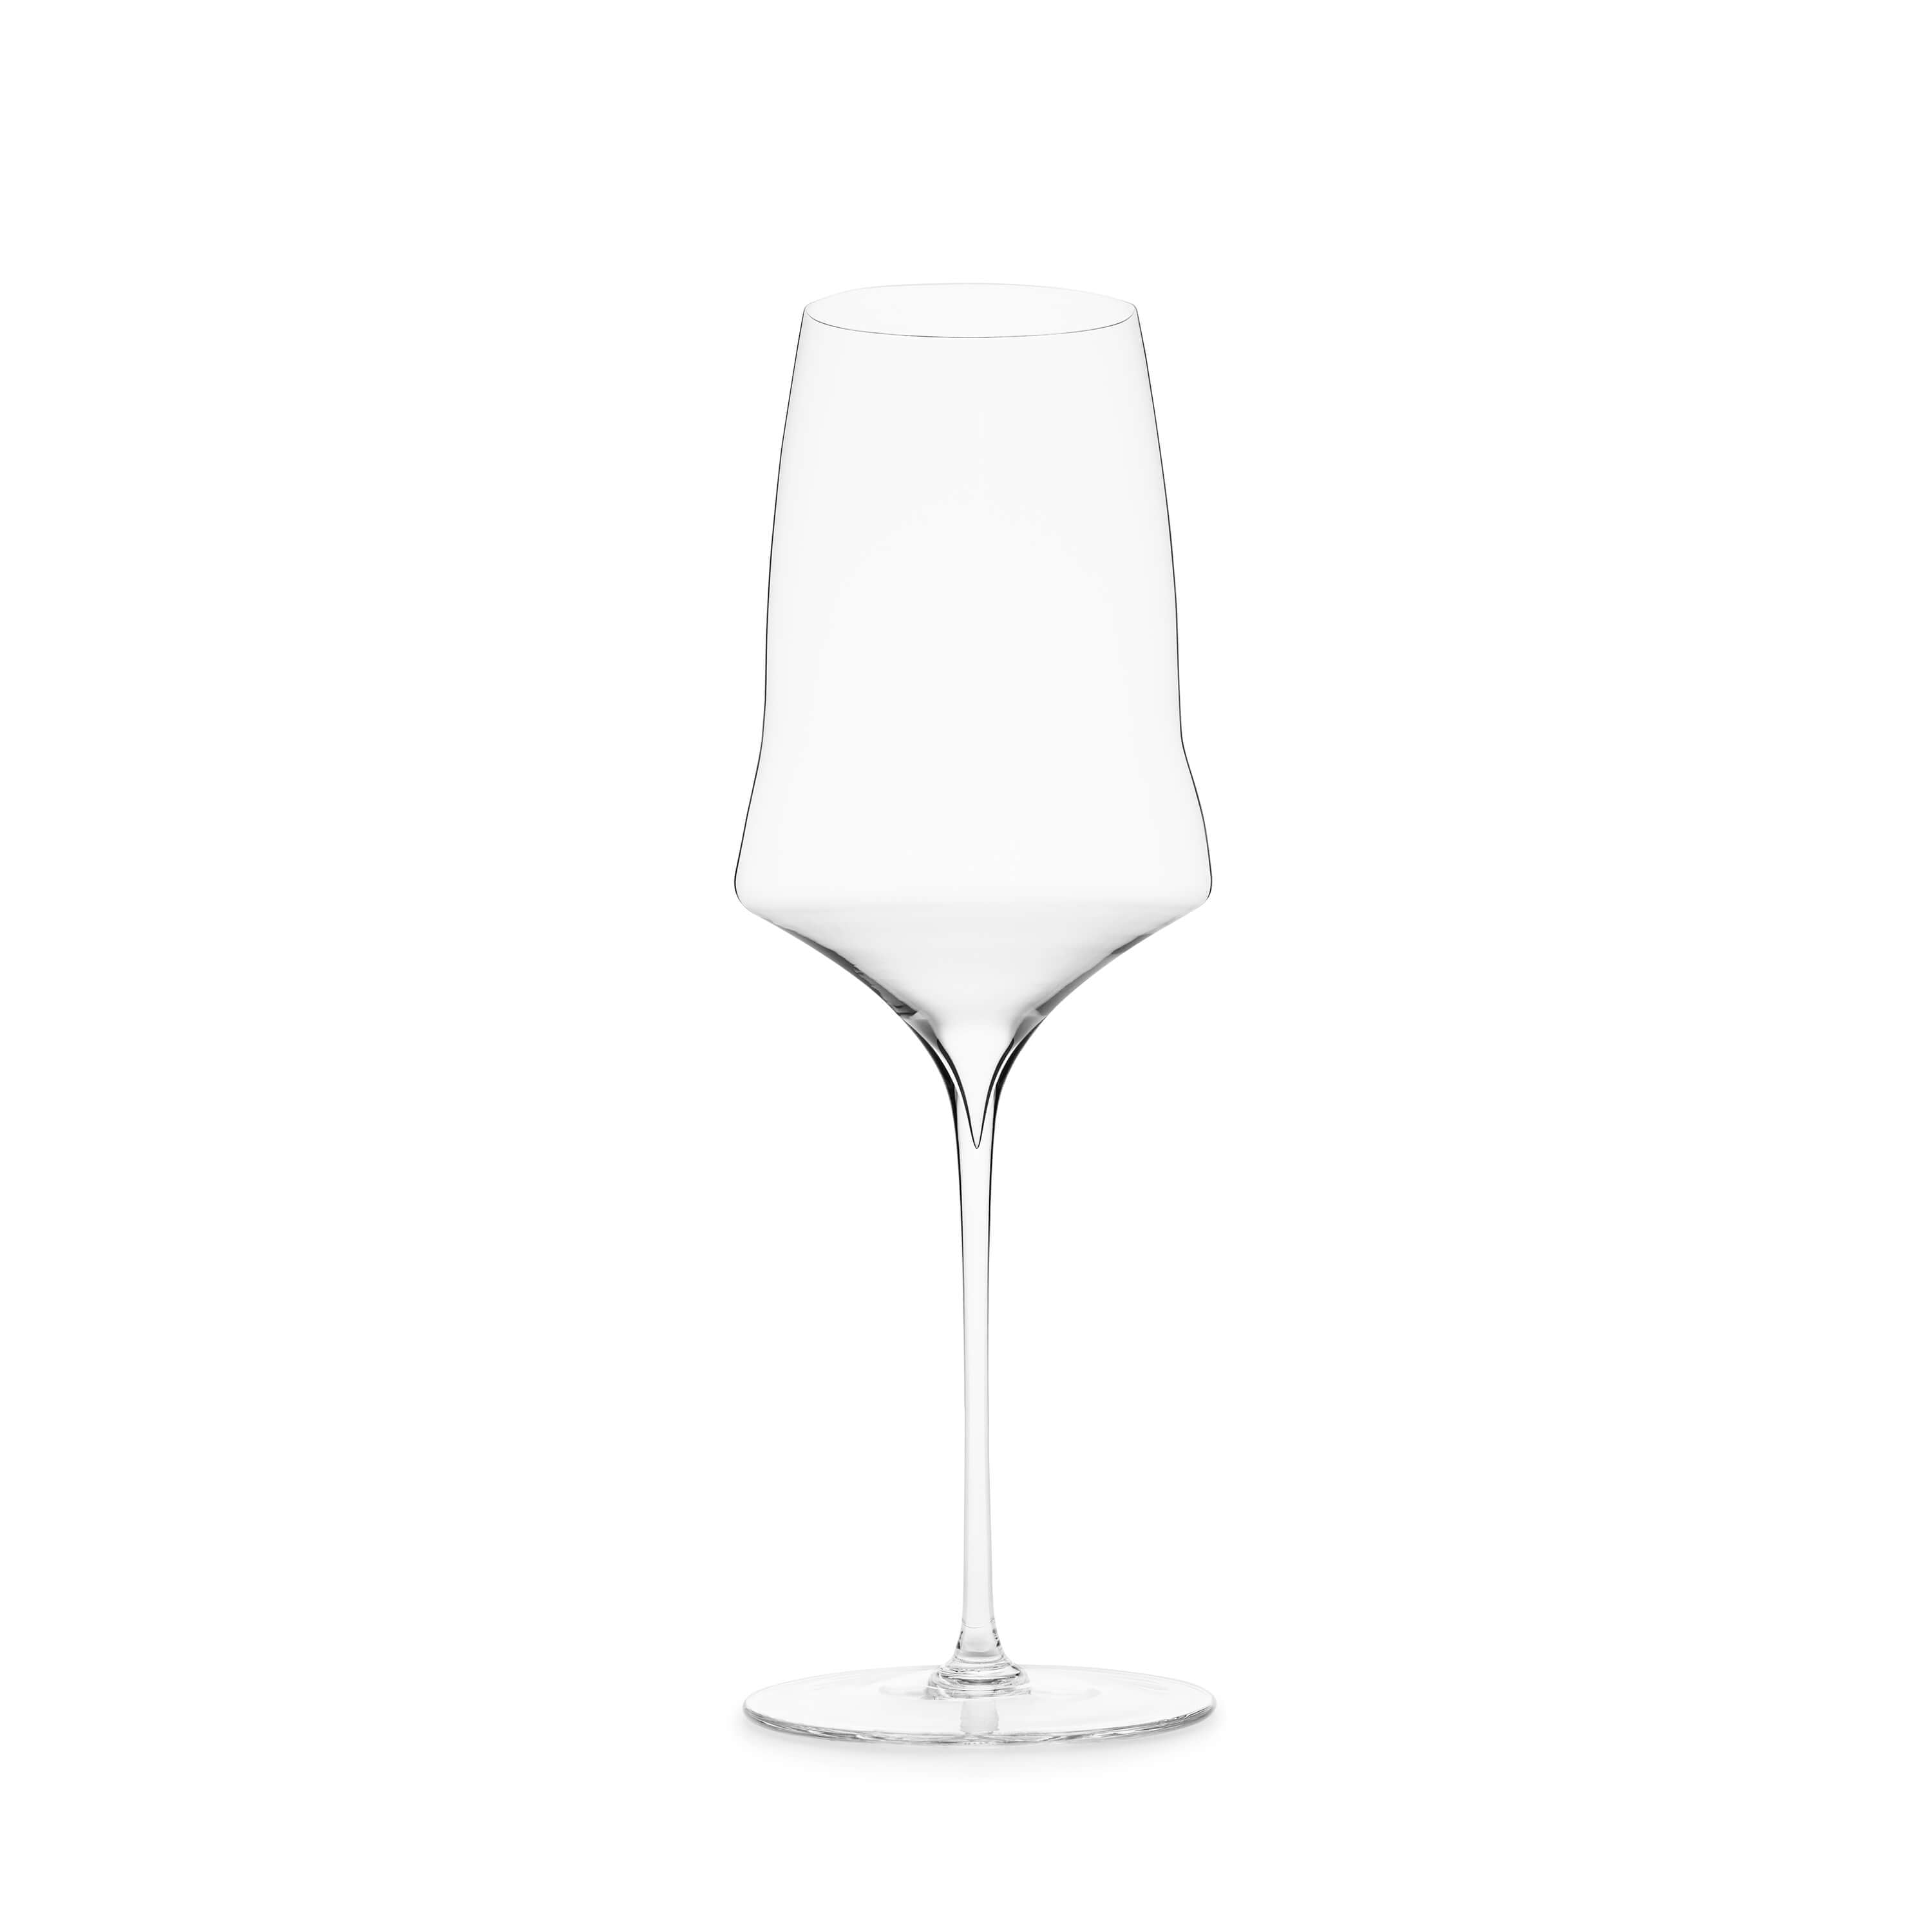 JOSEPHINE No 1 - White wine glass